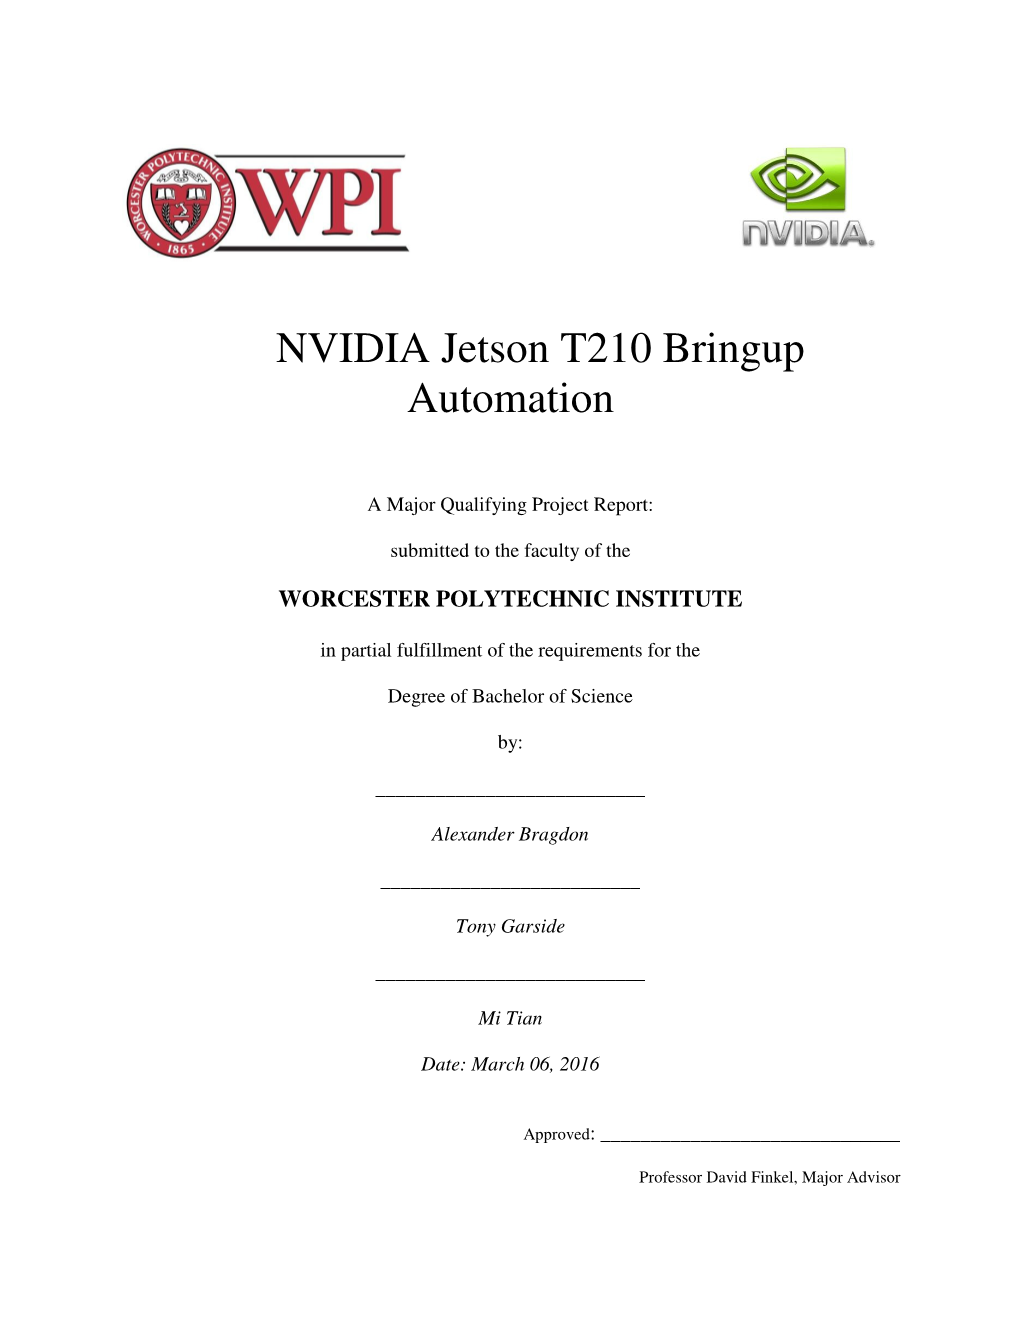 NVIDIA Jetson T210 Bringup Automation